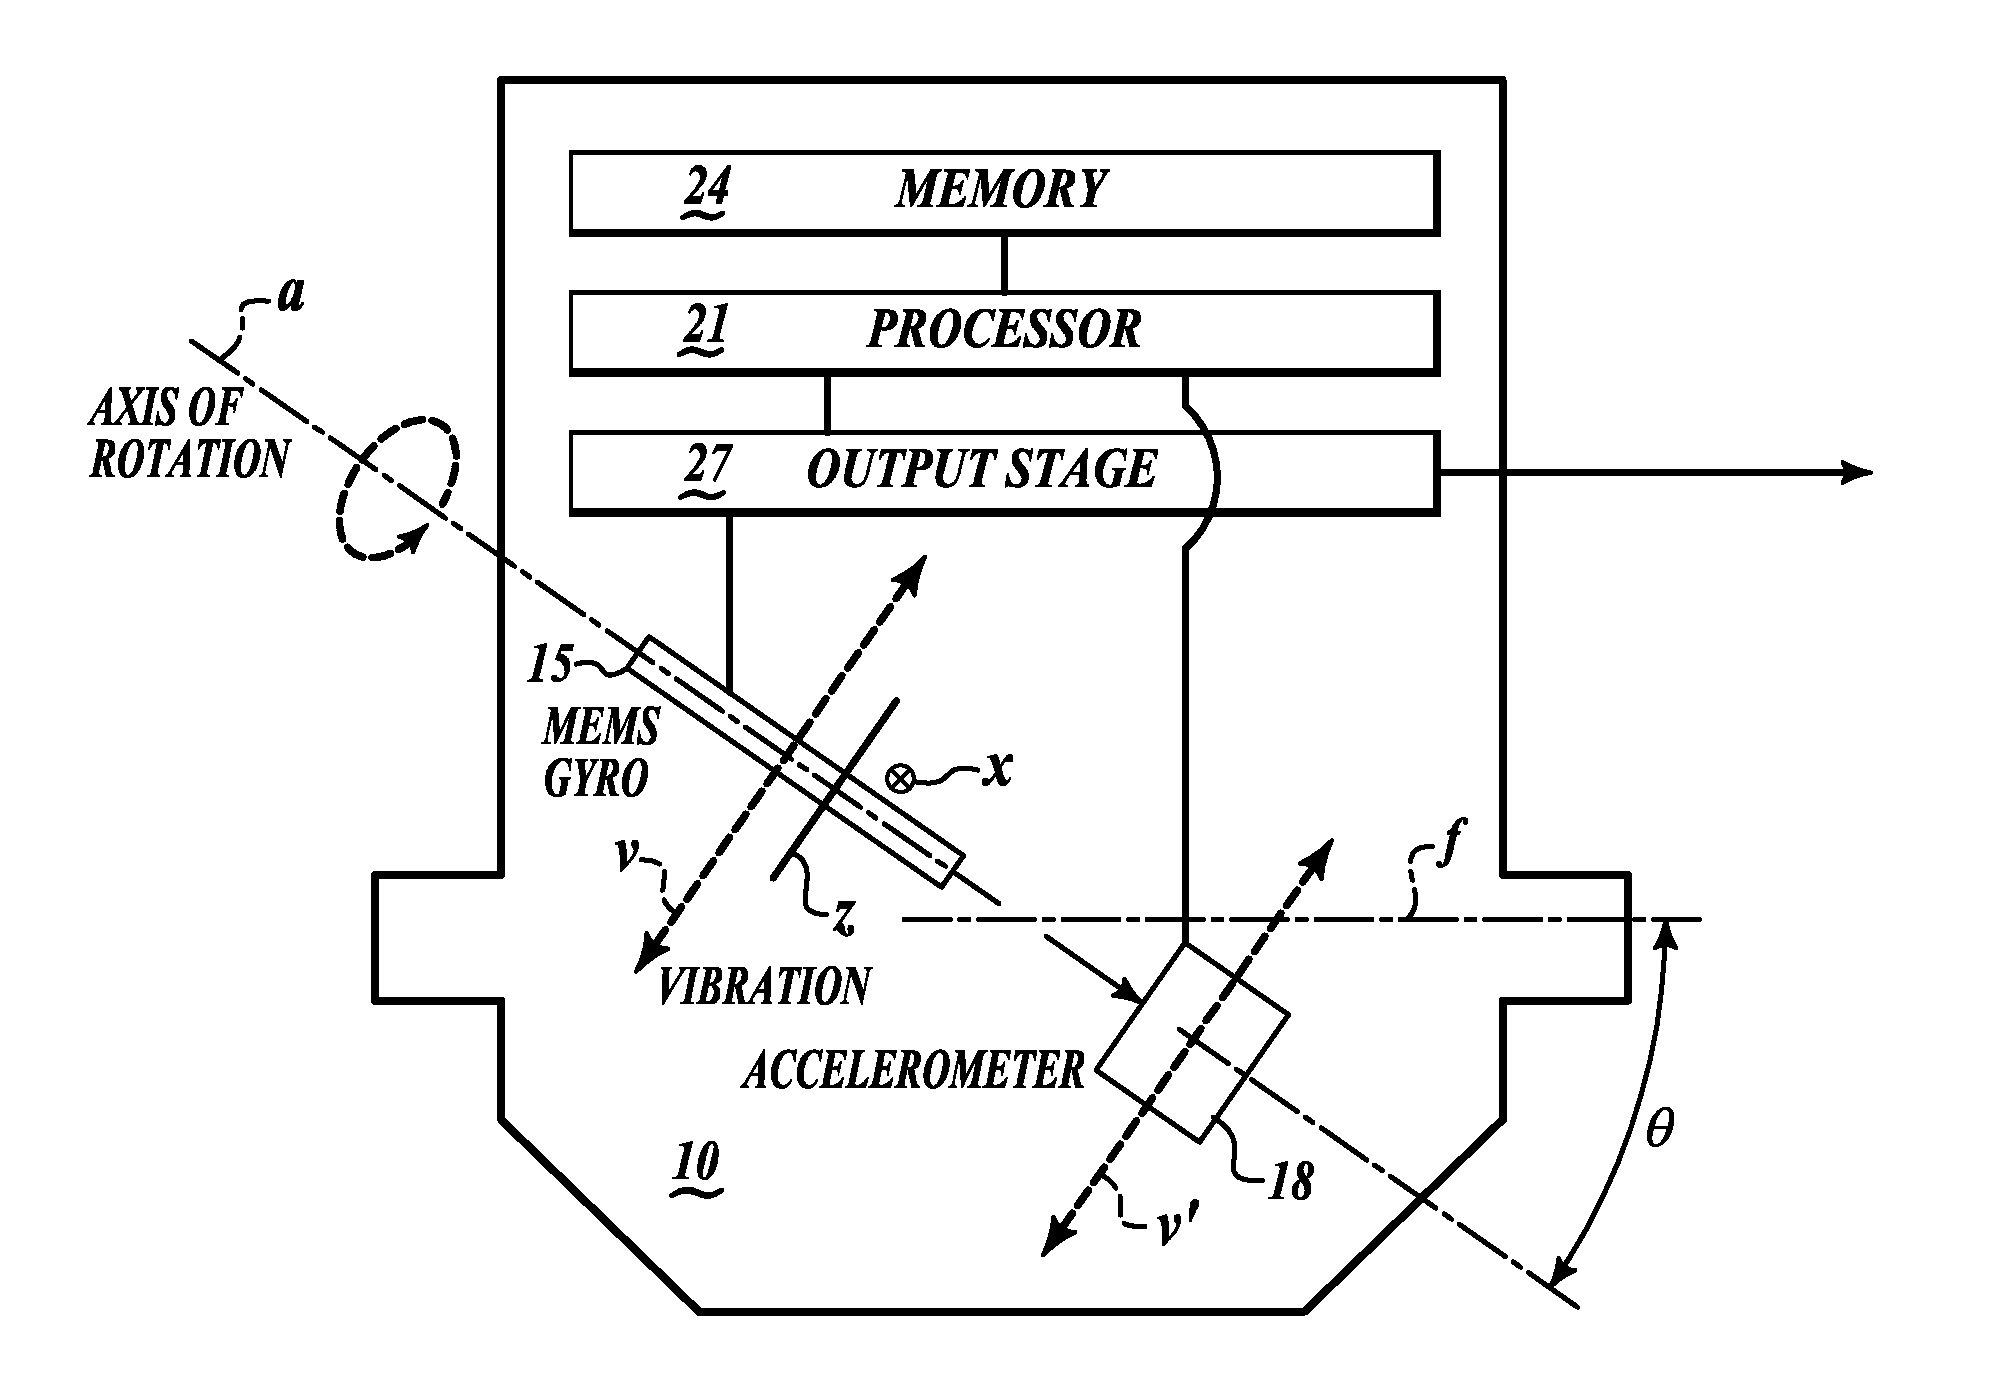 Accelerometer derived gyro vibration rectification error compensation